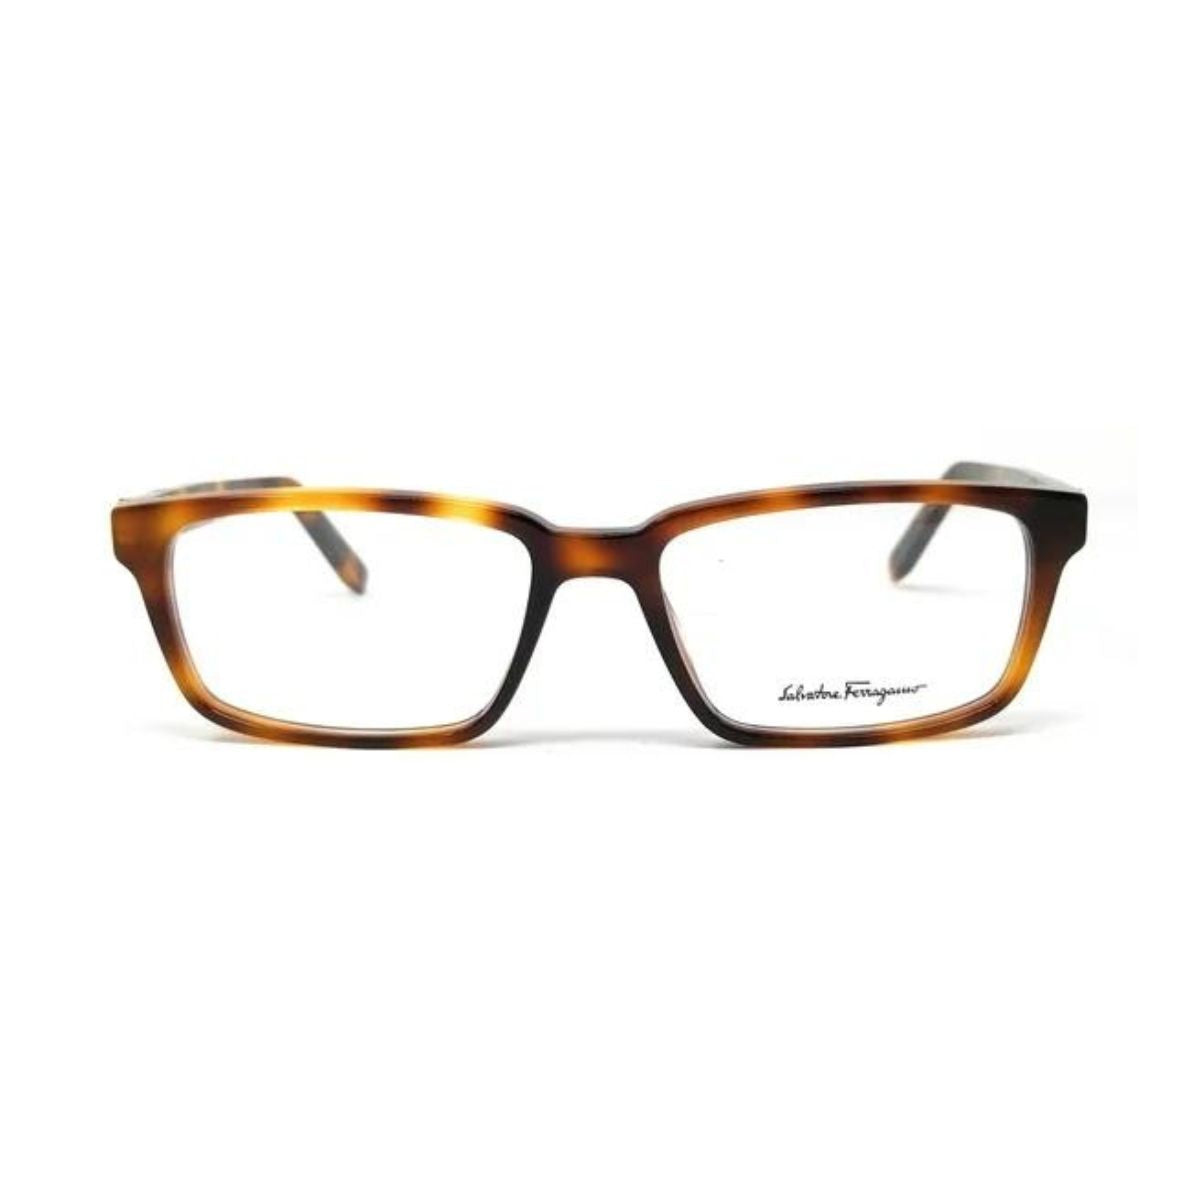 "buy Salvatore Ferragamo SF2772 214 rectangle eyeglasses frame for men's at optorium"